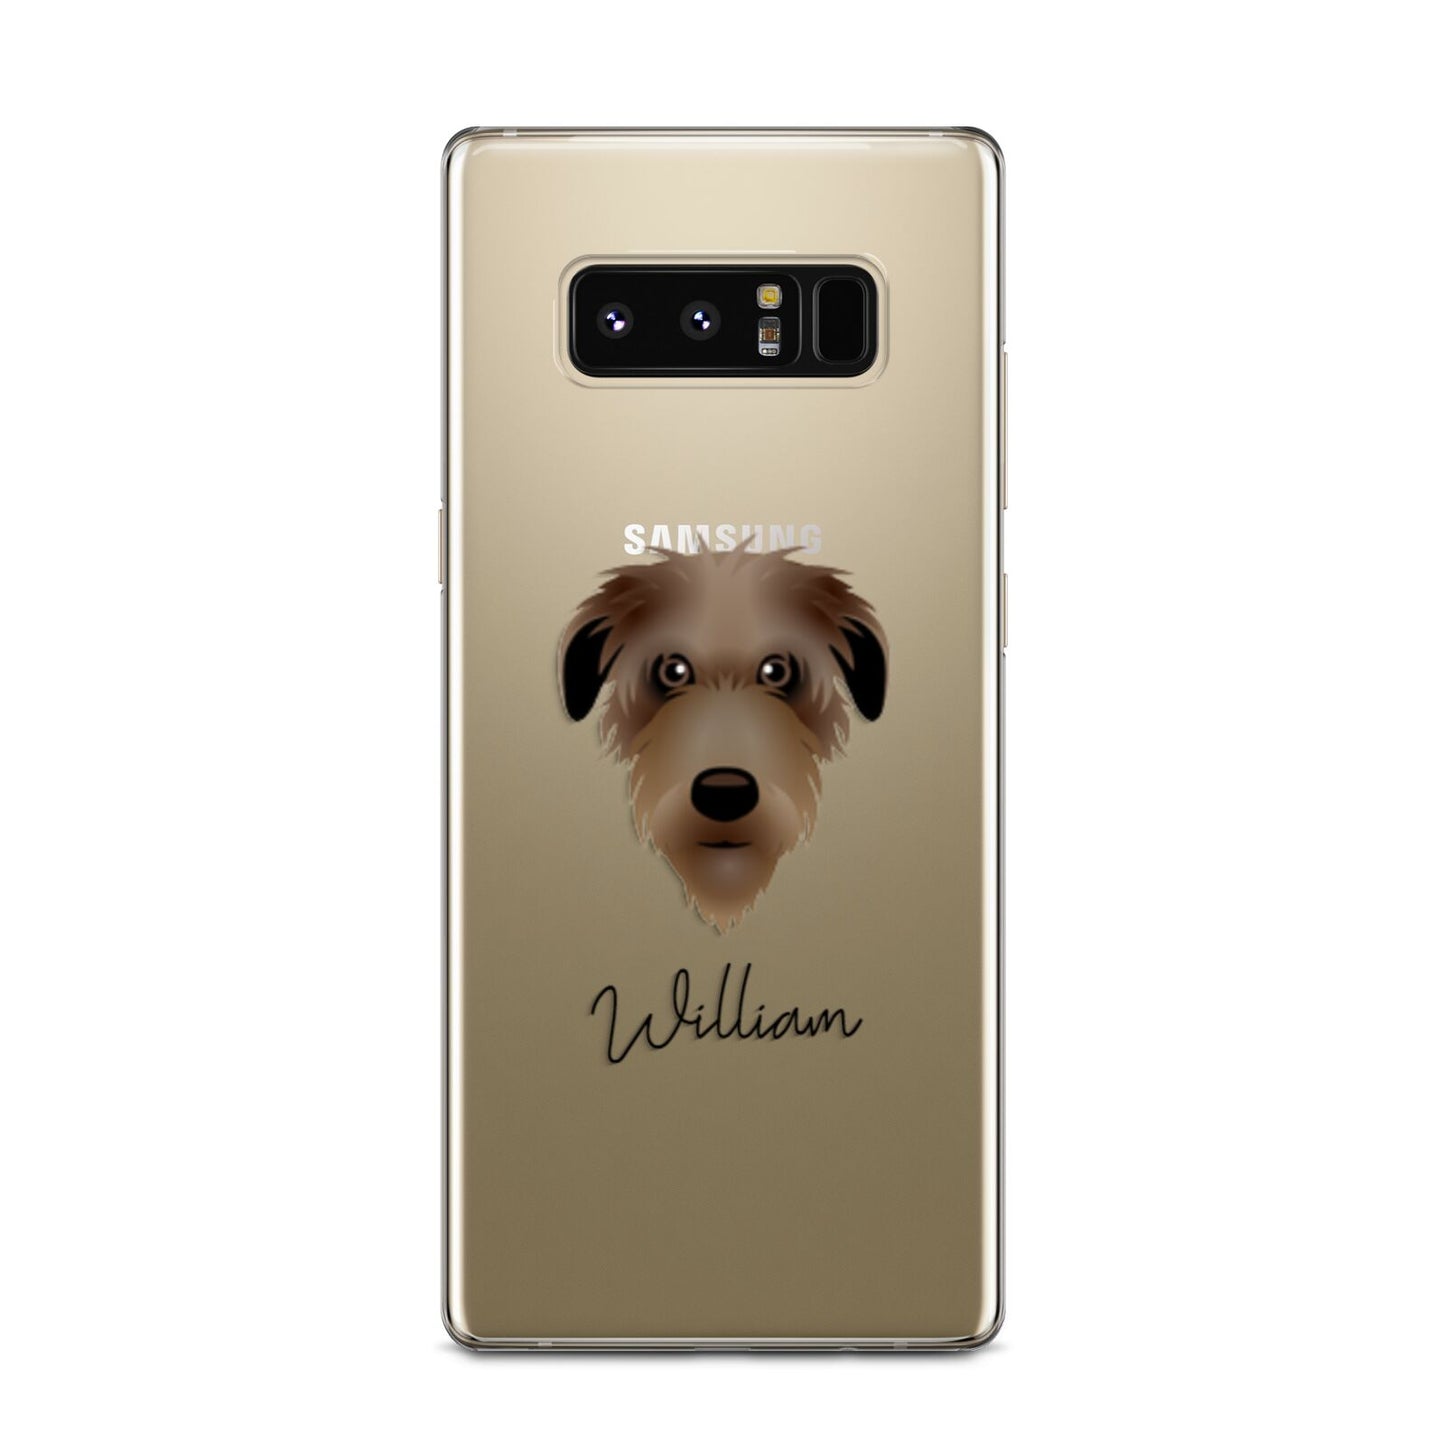 Deerhound Personalised Samsung Galaxy Note 8 Case